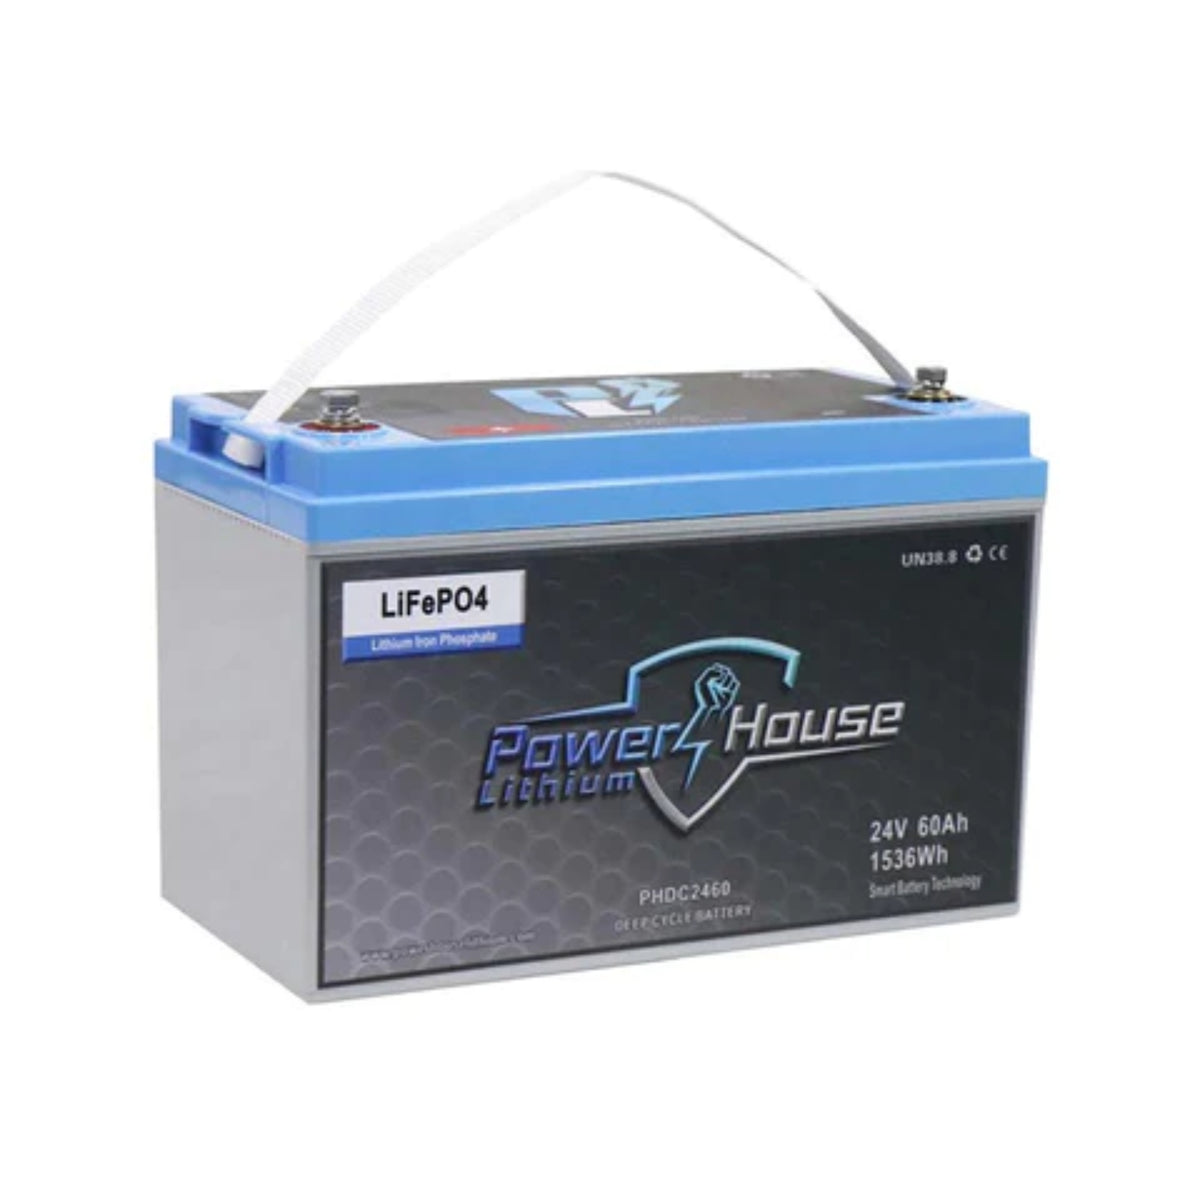 PowerHouse Lithium 24V 60Ah Deep Cycle Battery